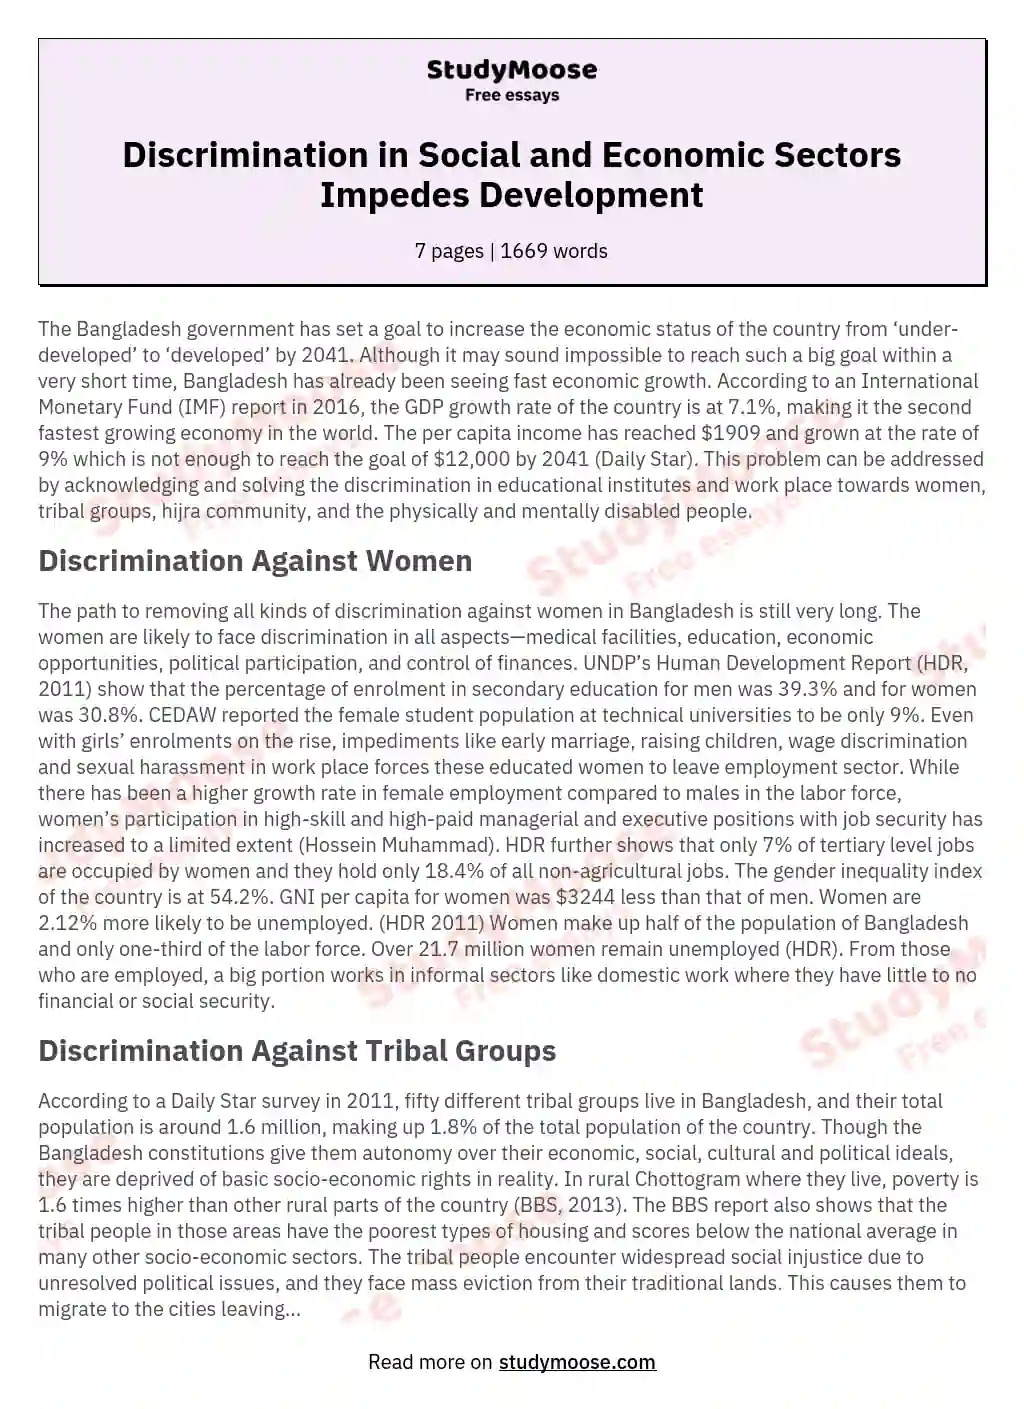 Discrimination in Social and Economic Sectors Impedes Development essay